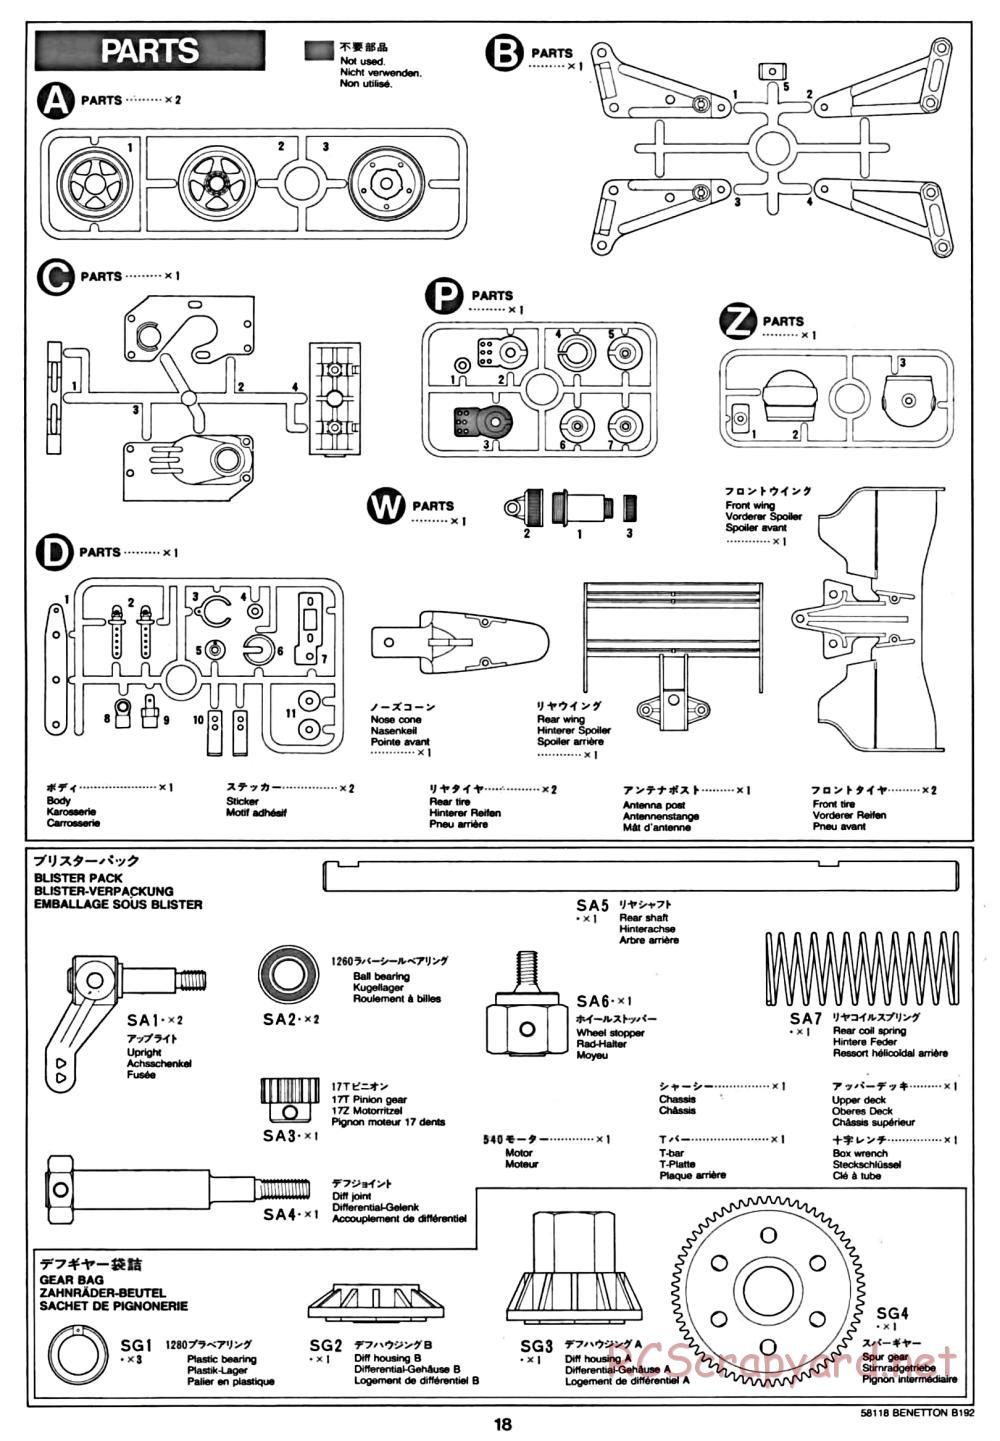 Tamiya - Benetton B192 - F102 Chassis - Manual - Page 18